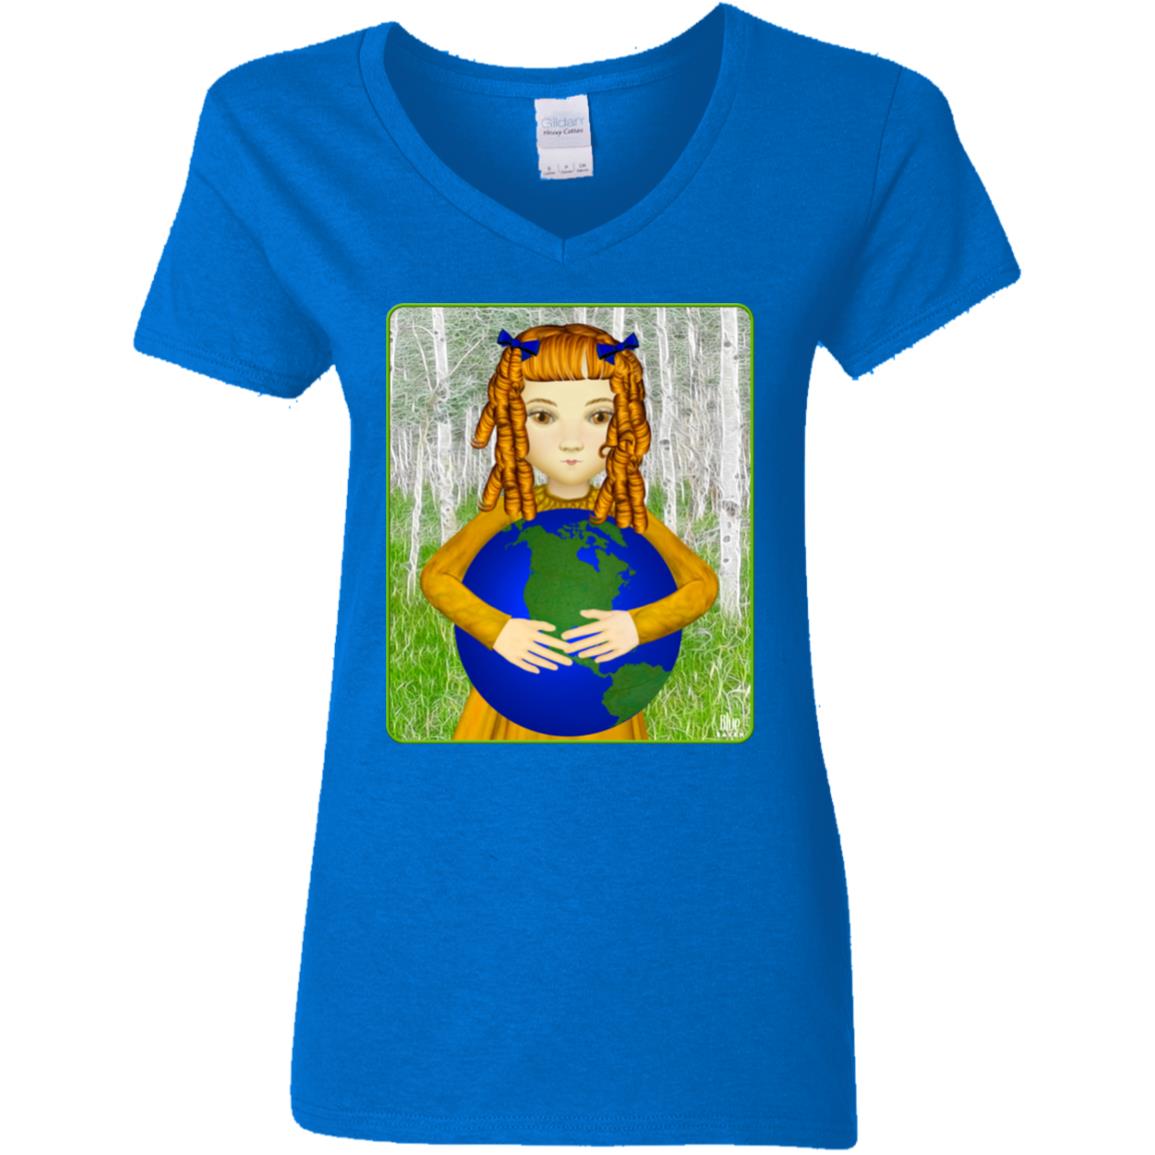 Save My World - Women's V-Neck T Shirt